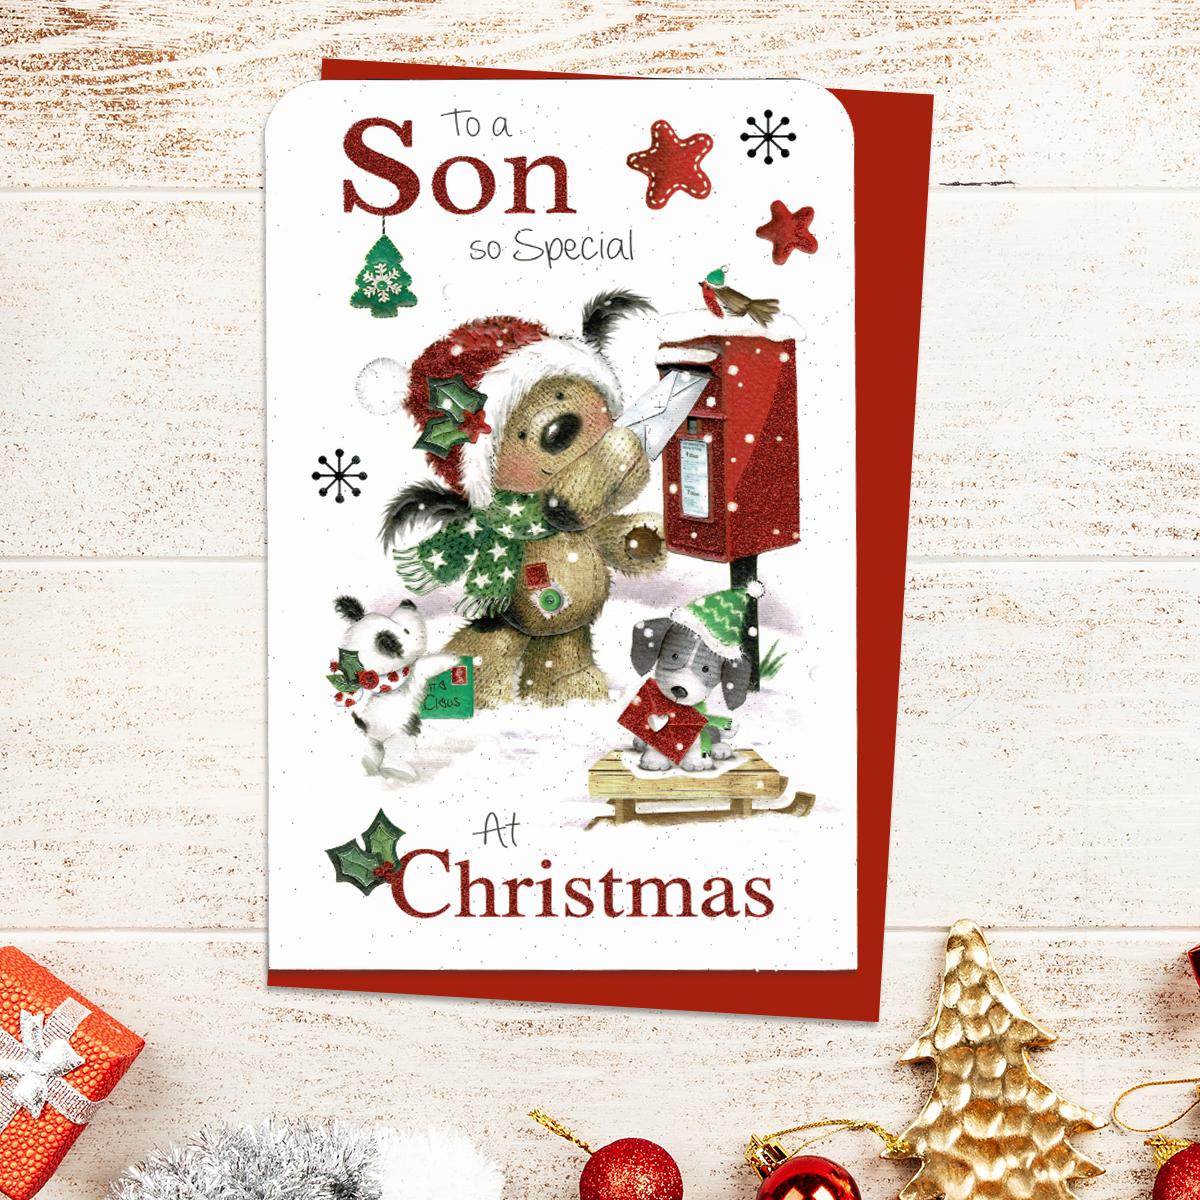 Son Christmas Card Alongside Its Red Envelope